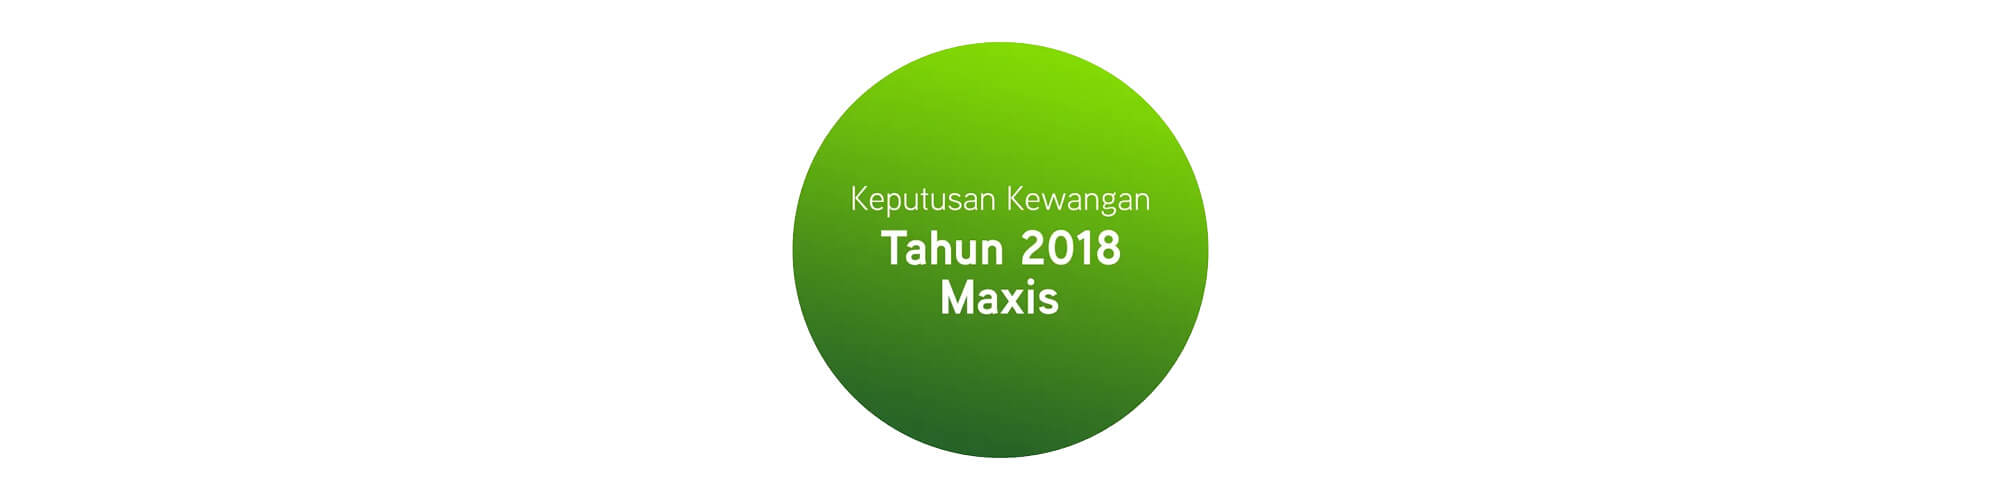 Bersiap Sedia Untuk Pertumbuhan Masa Depan, Maxis Mengumumkan Strategi Baru